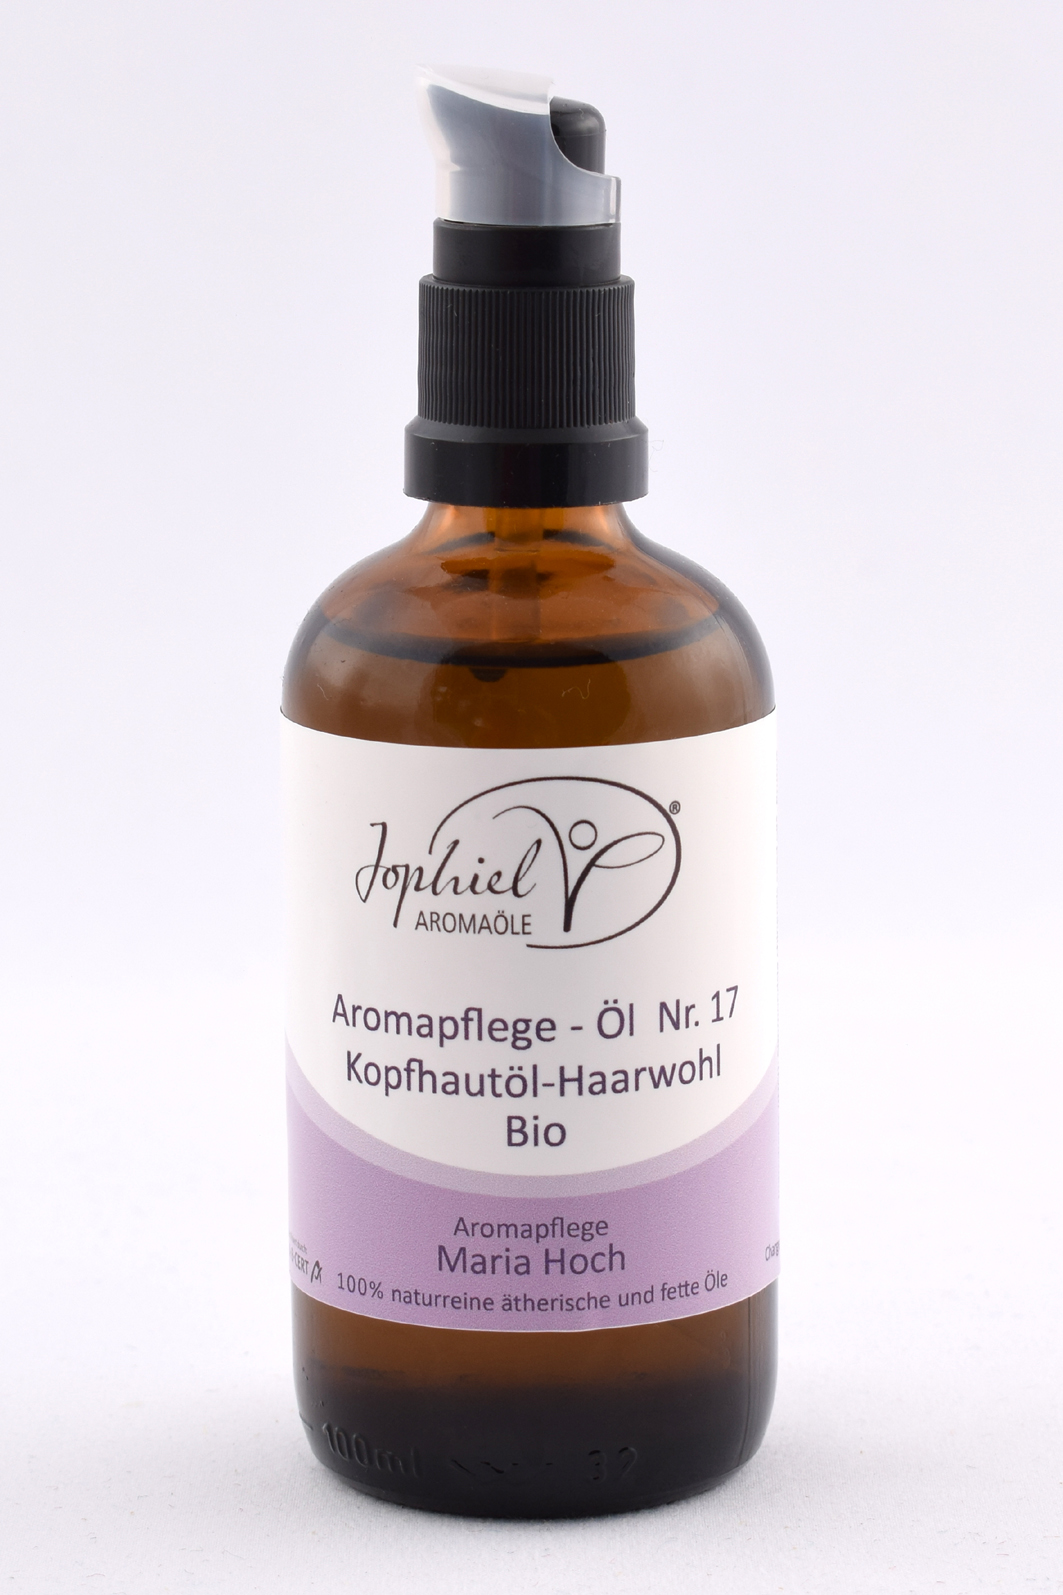 Aromapflege-Öl Nr. 17 Kopfhautöl-Haarwohl Bio 100 ml